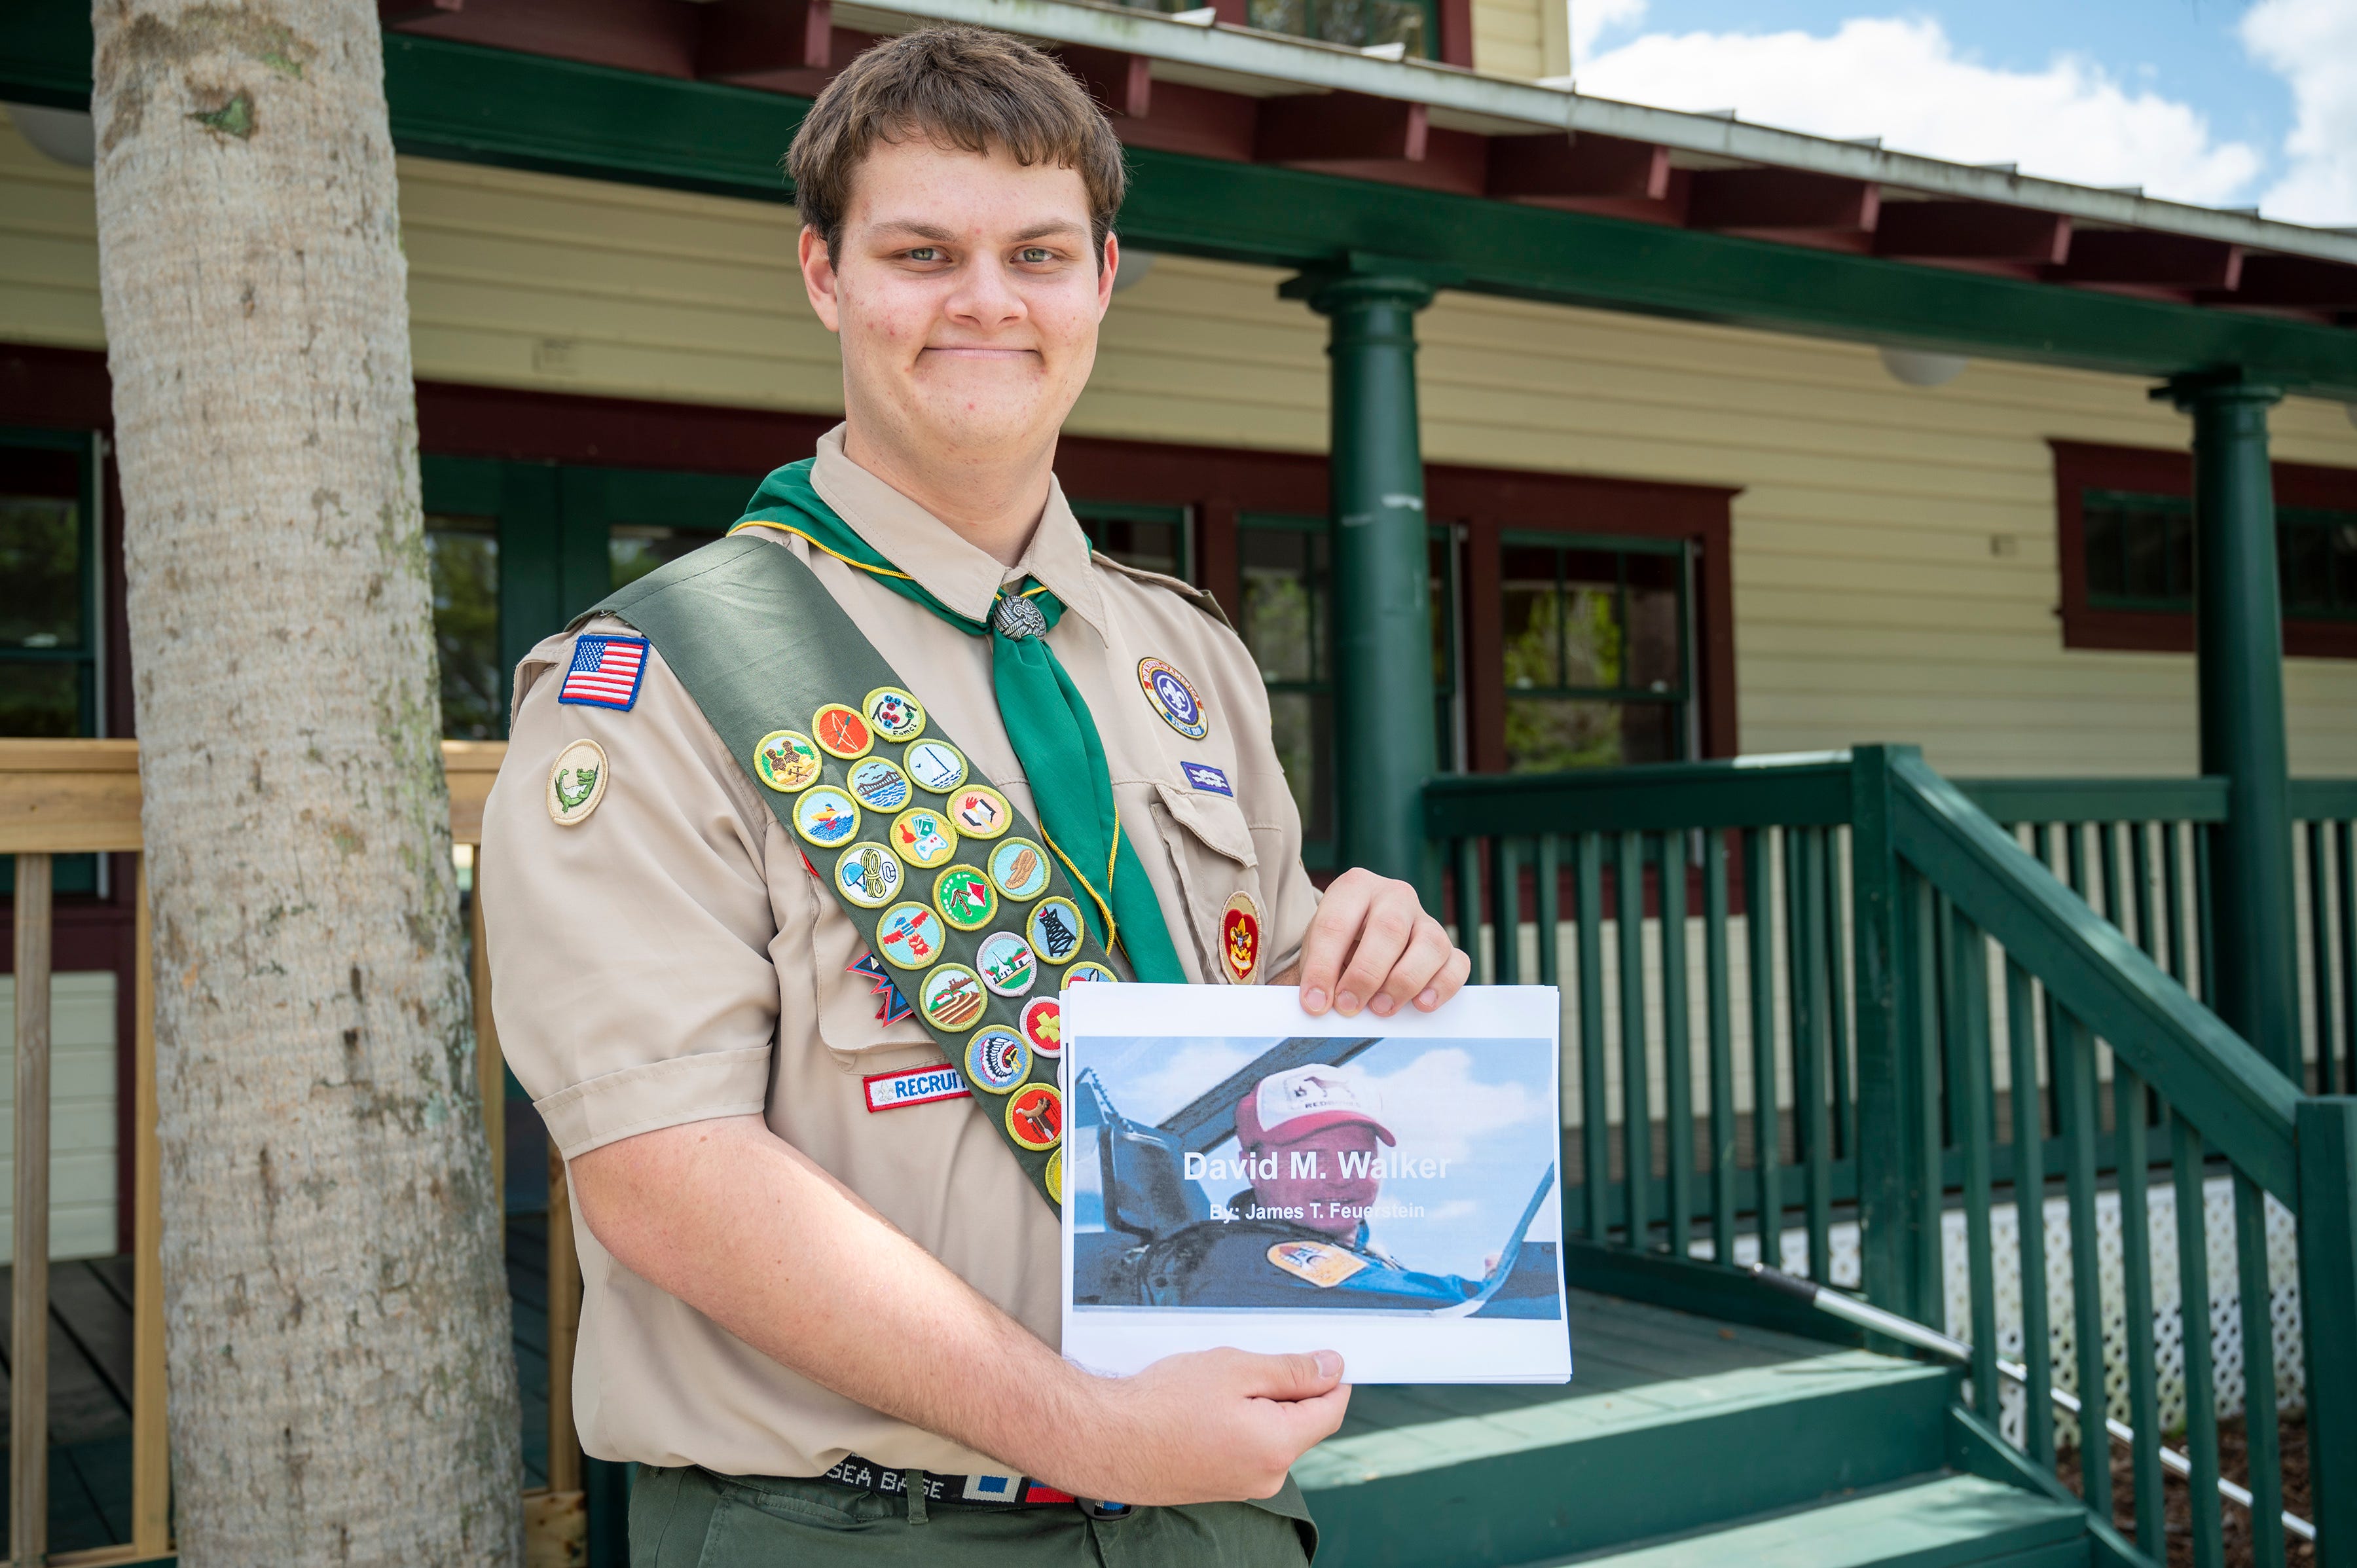 Wiegen Leeuw baas Boy Scout working to honor Lake County's only astronaut